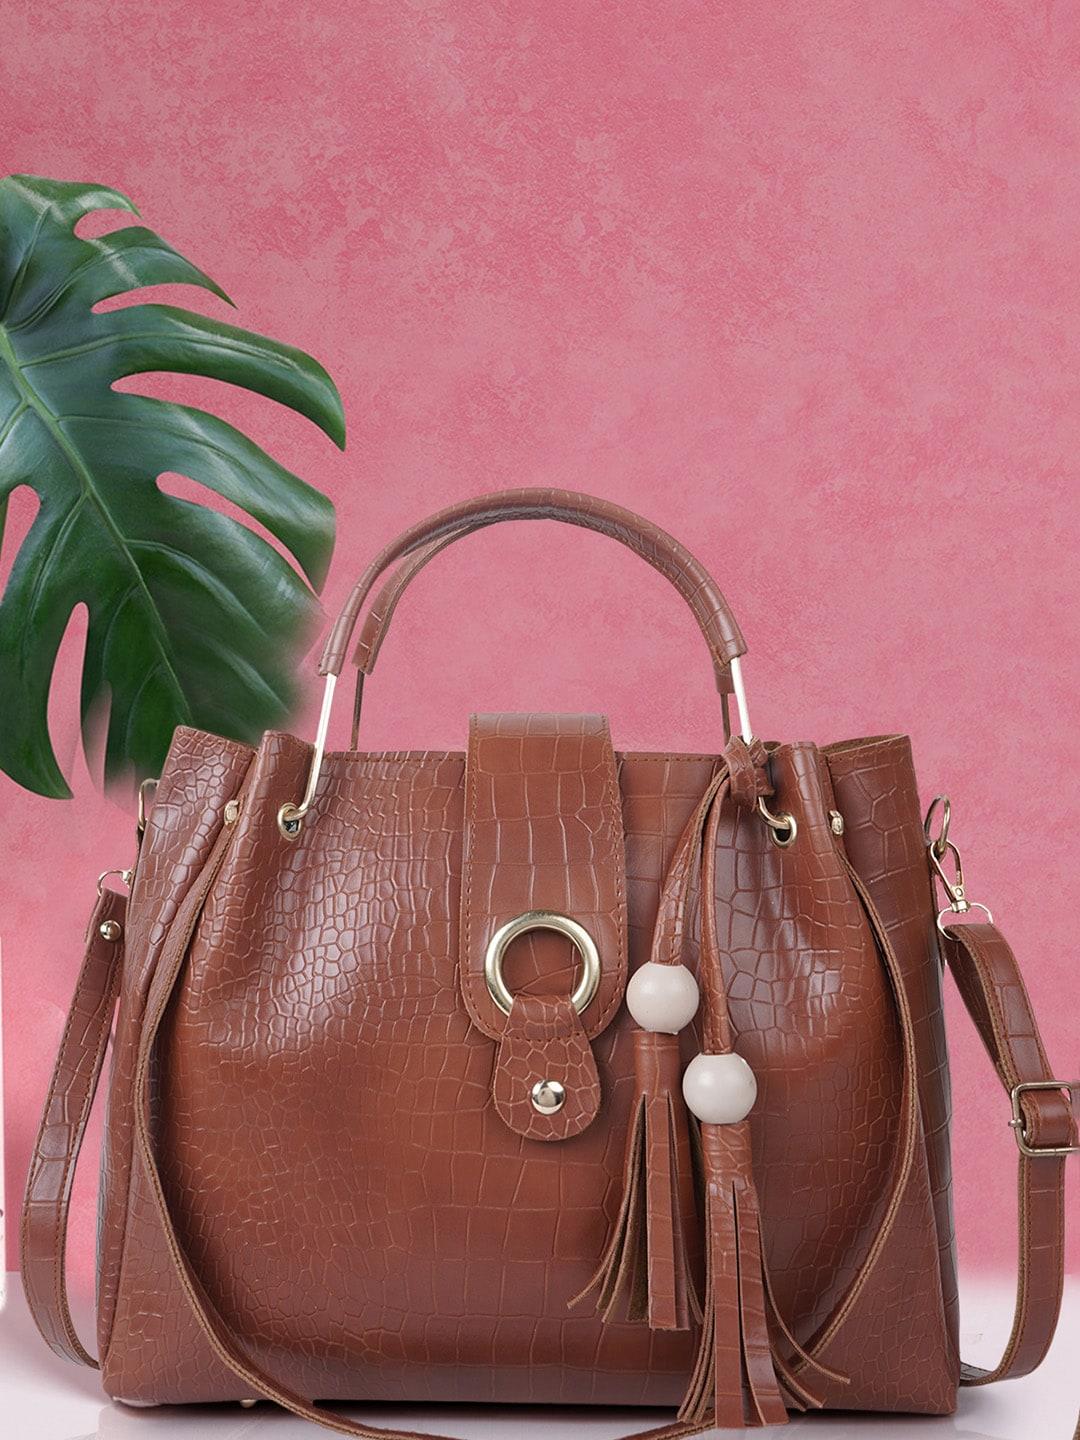 dressberry brown textured structured handheld bag with tasselled